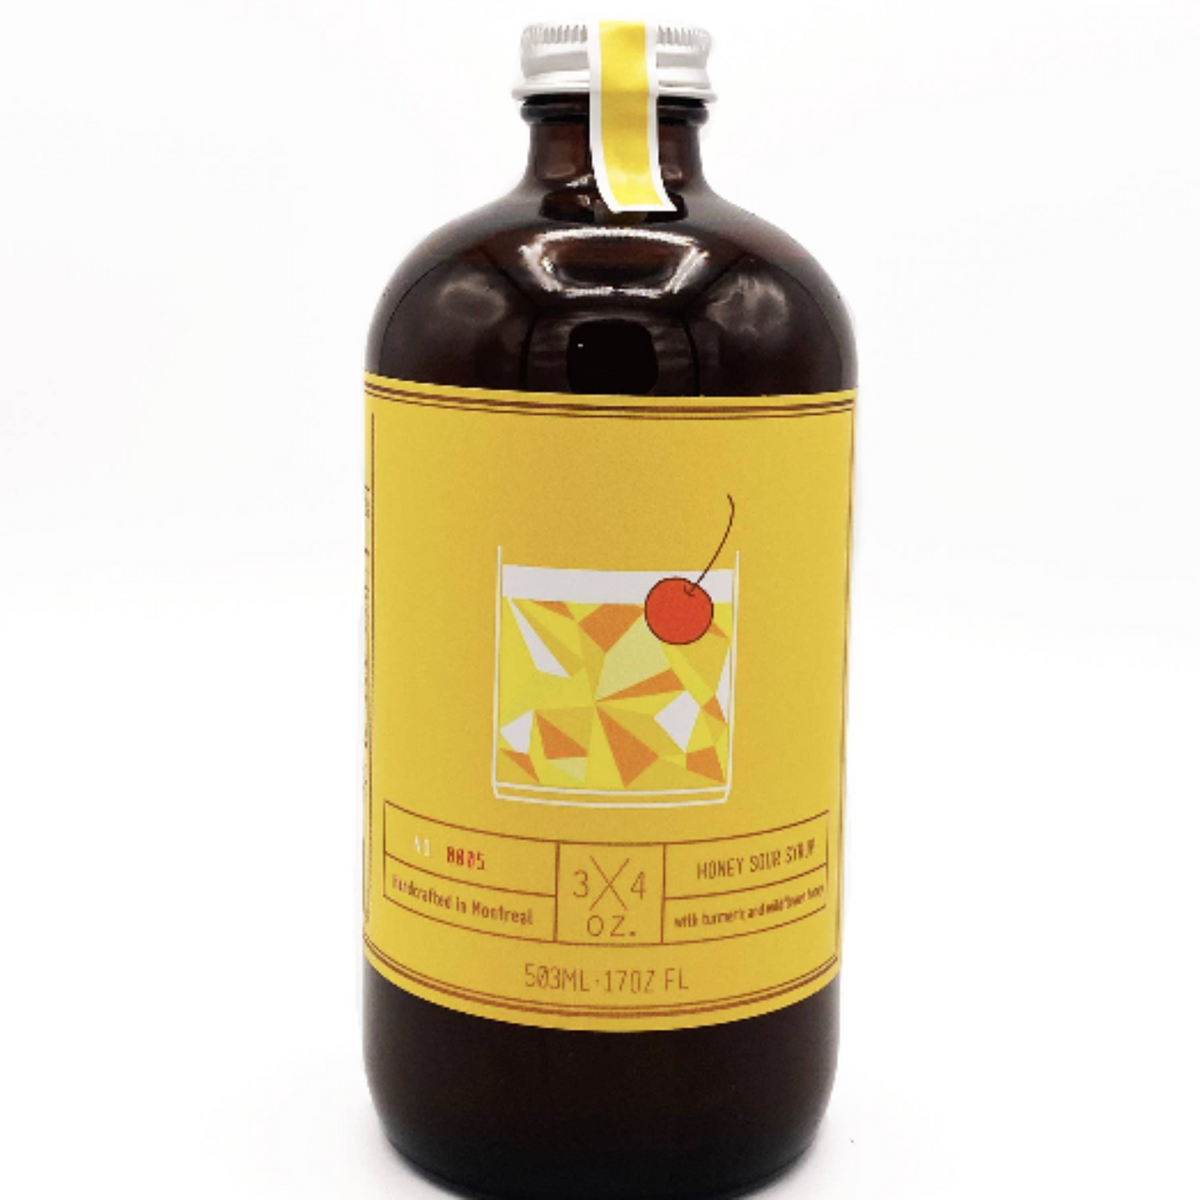 3/4 Oz. Tonic Maison - Honey Sour Syrup - 503 ml